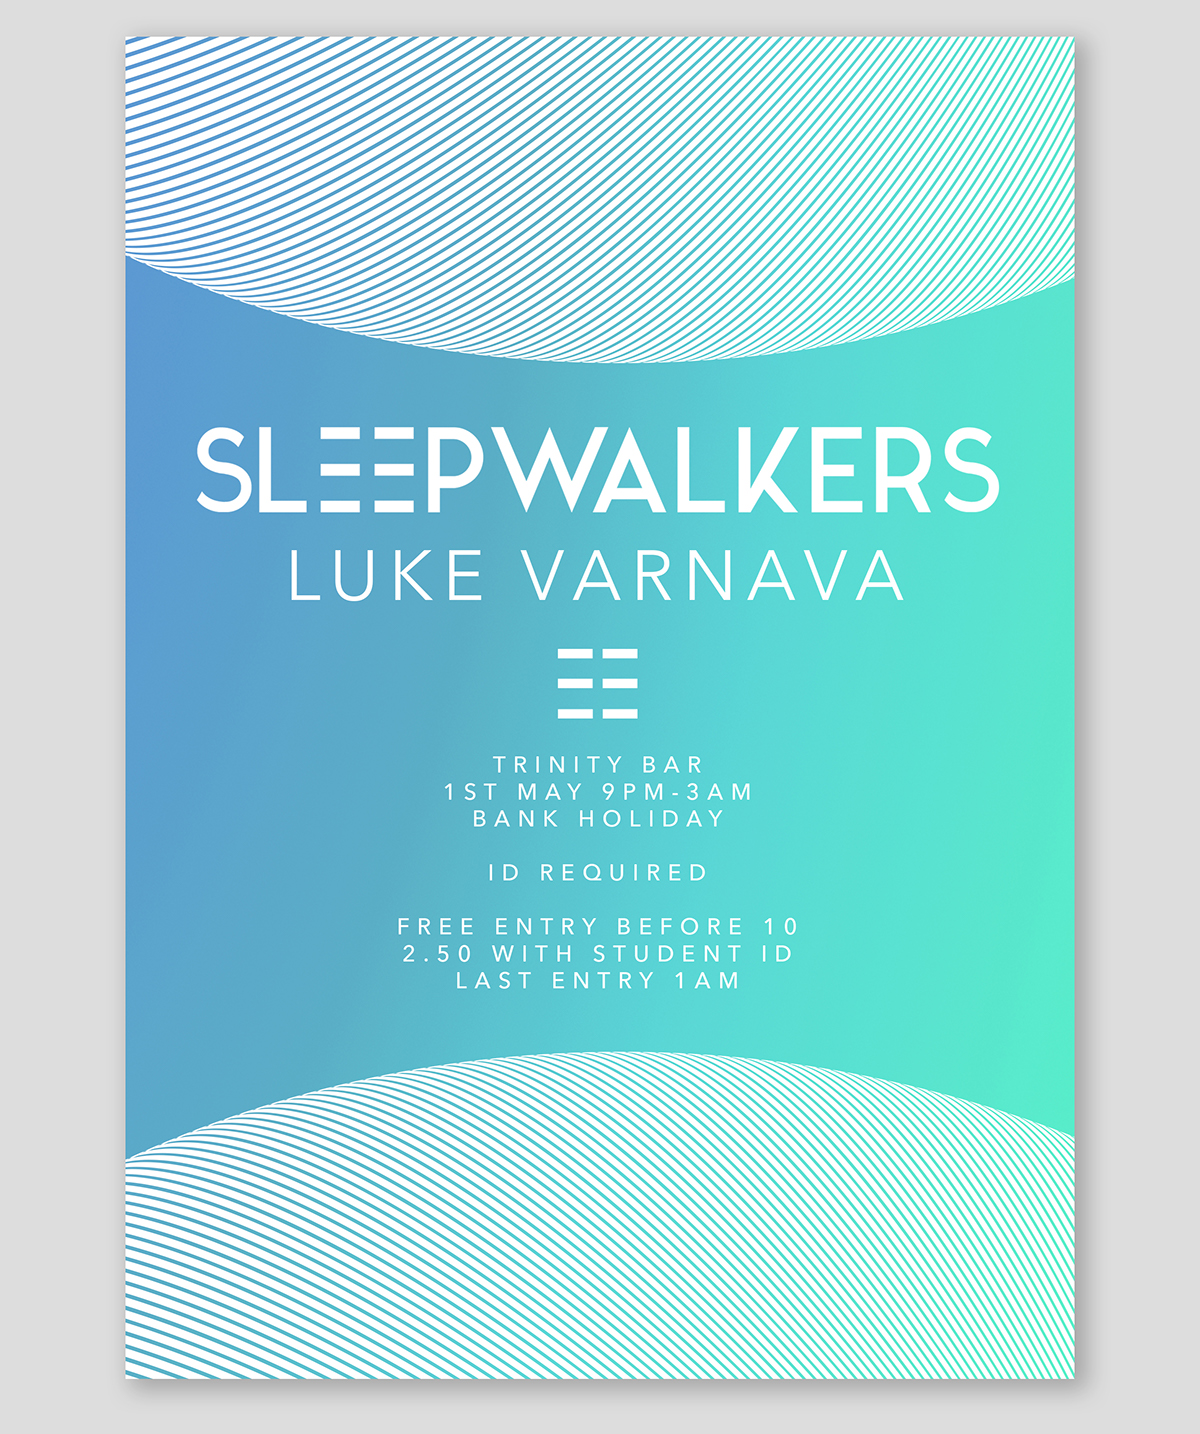 Sleepwalkers electronic Poster Design cover photo social media waveform music design music promotion